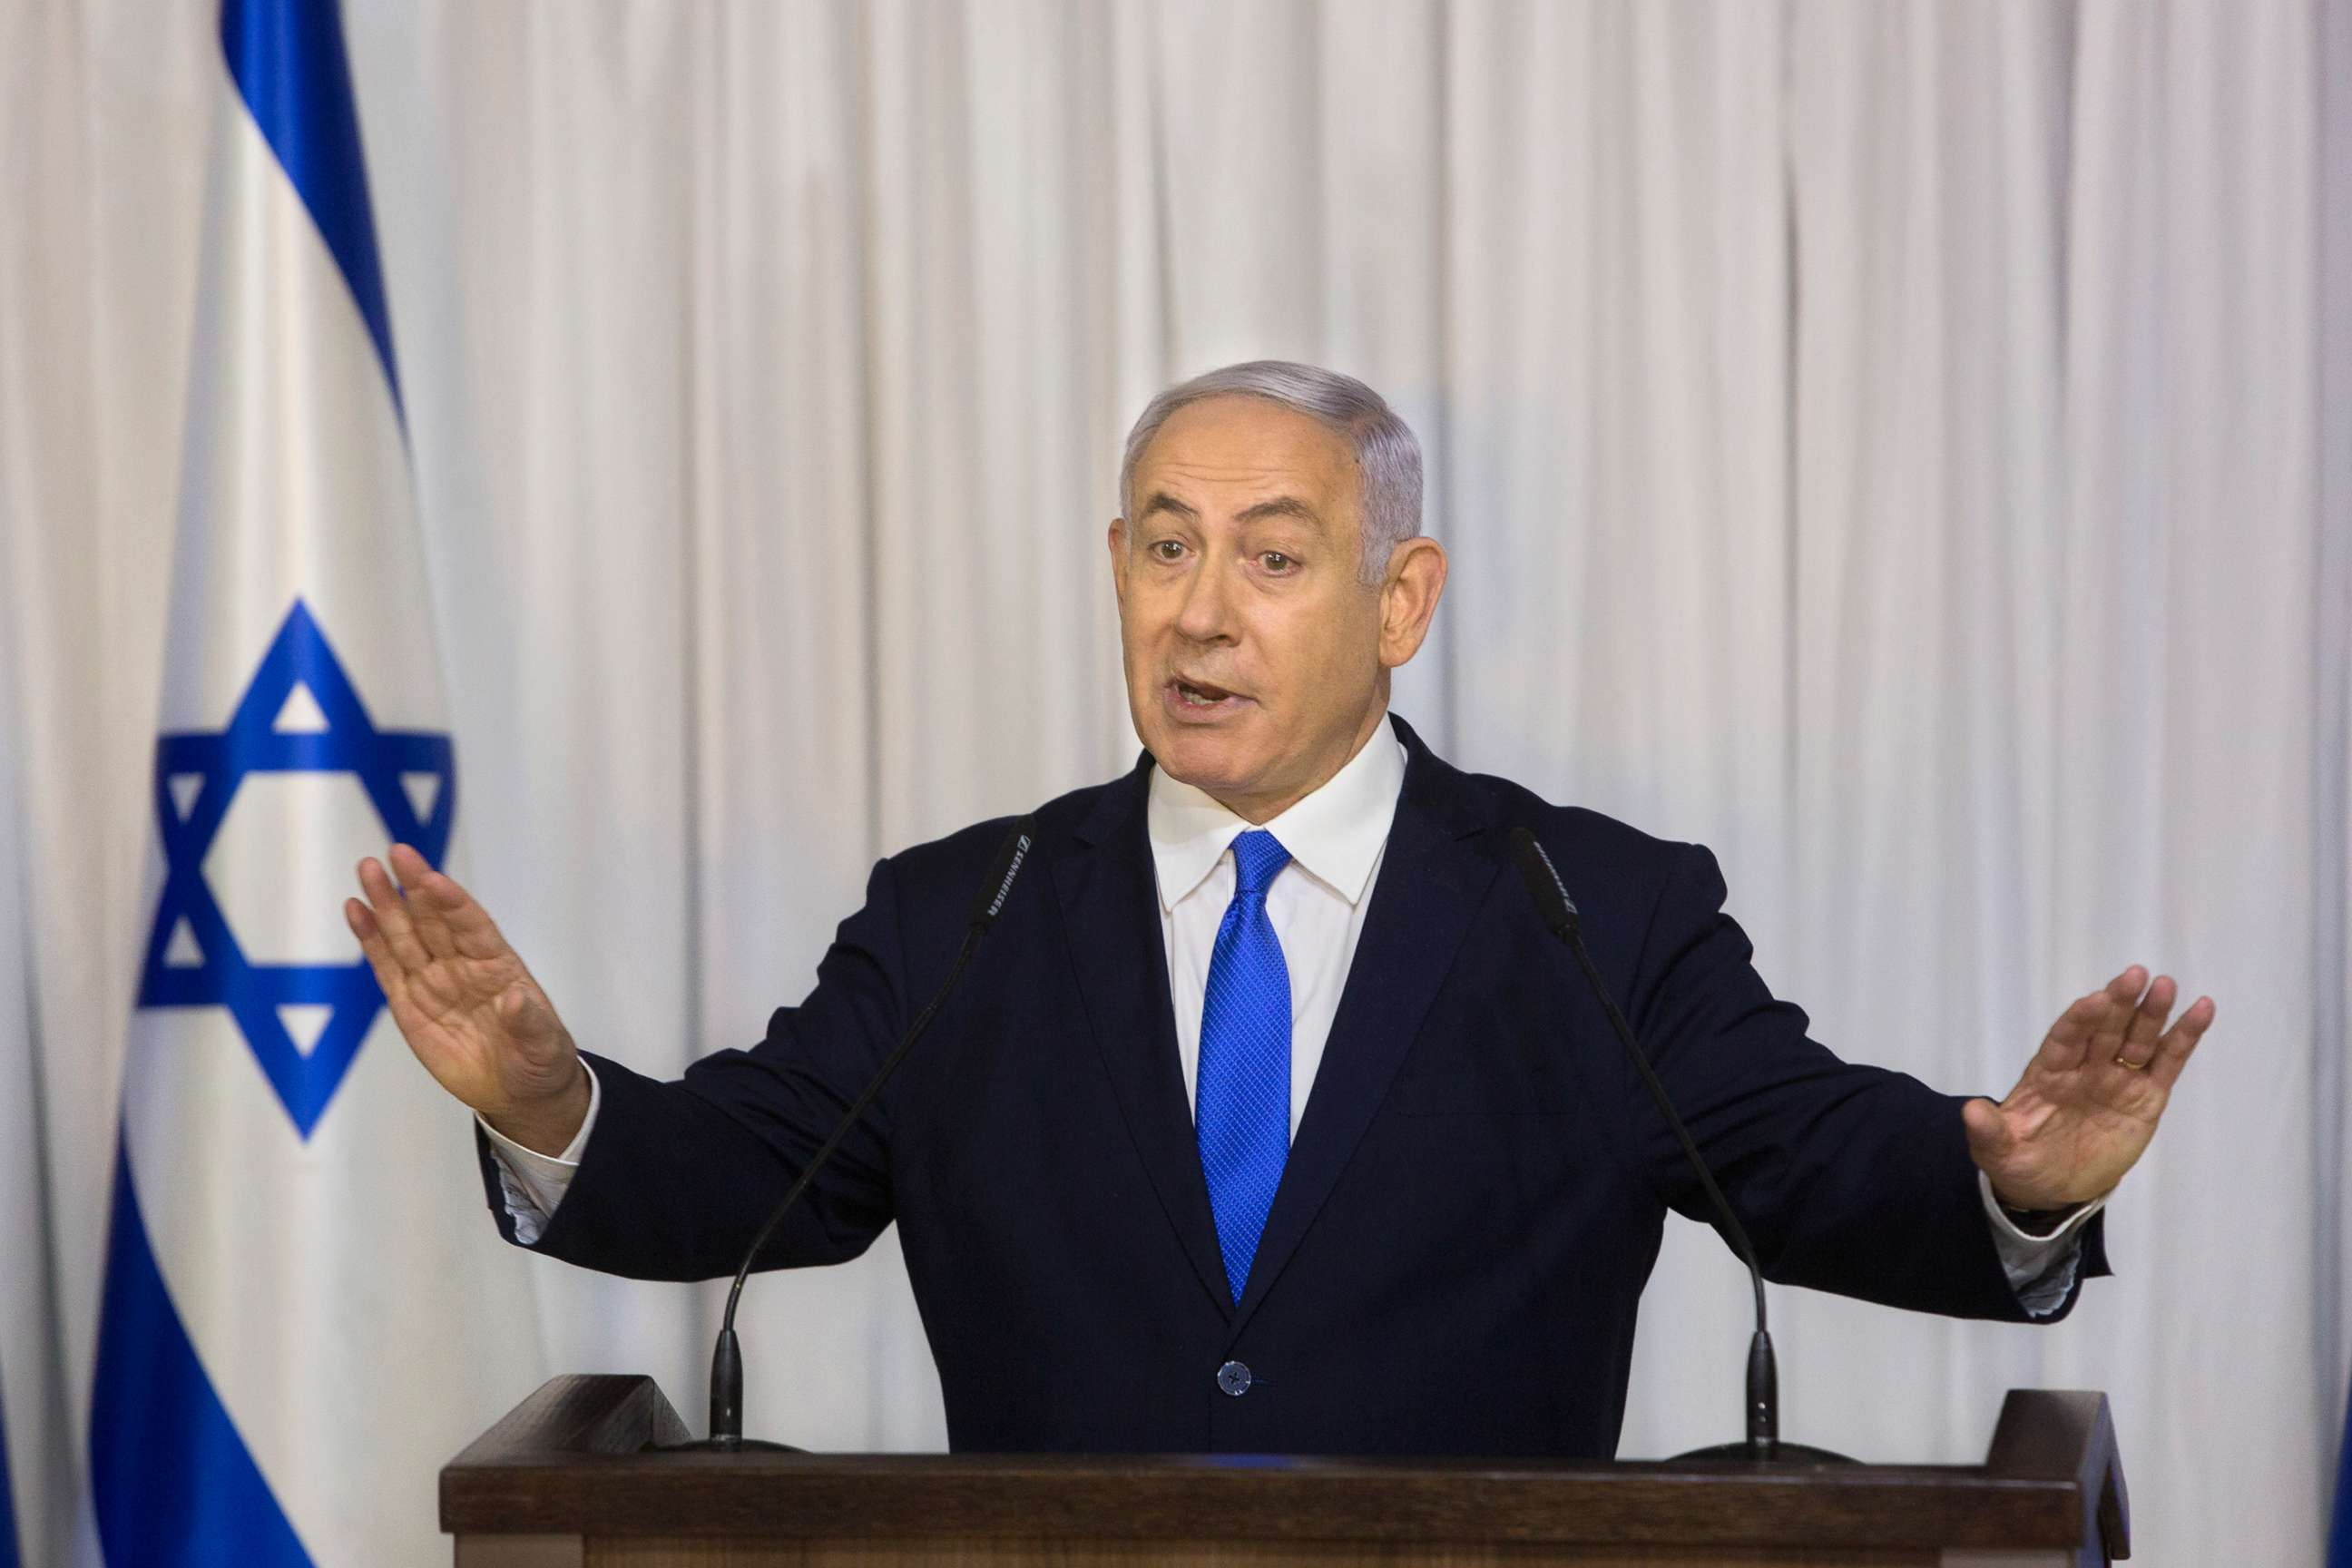 PHOTO: In this Feb. 21, 2019 file photo, Israeli Prime Minister Benjamin Netanyahu delivers a statement in Ramat Gan, Israel.